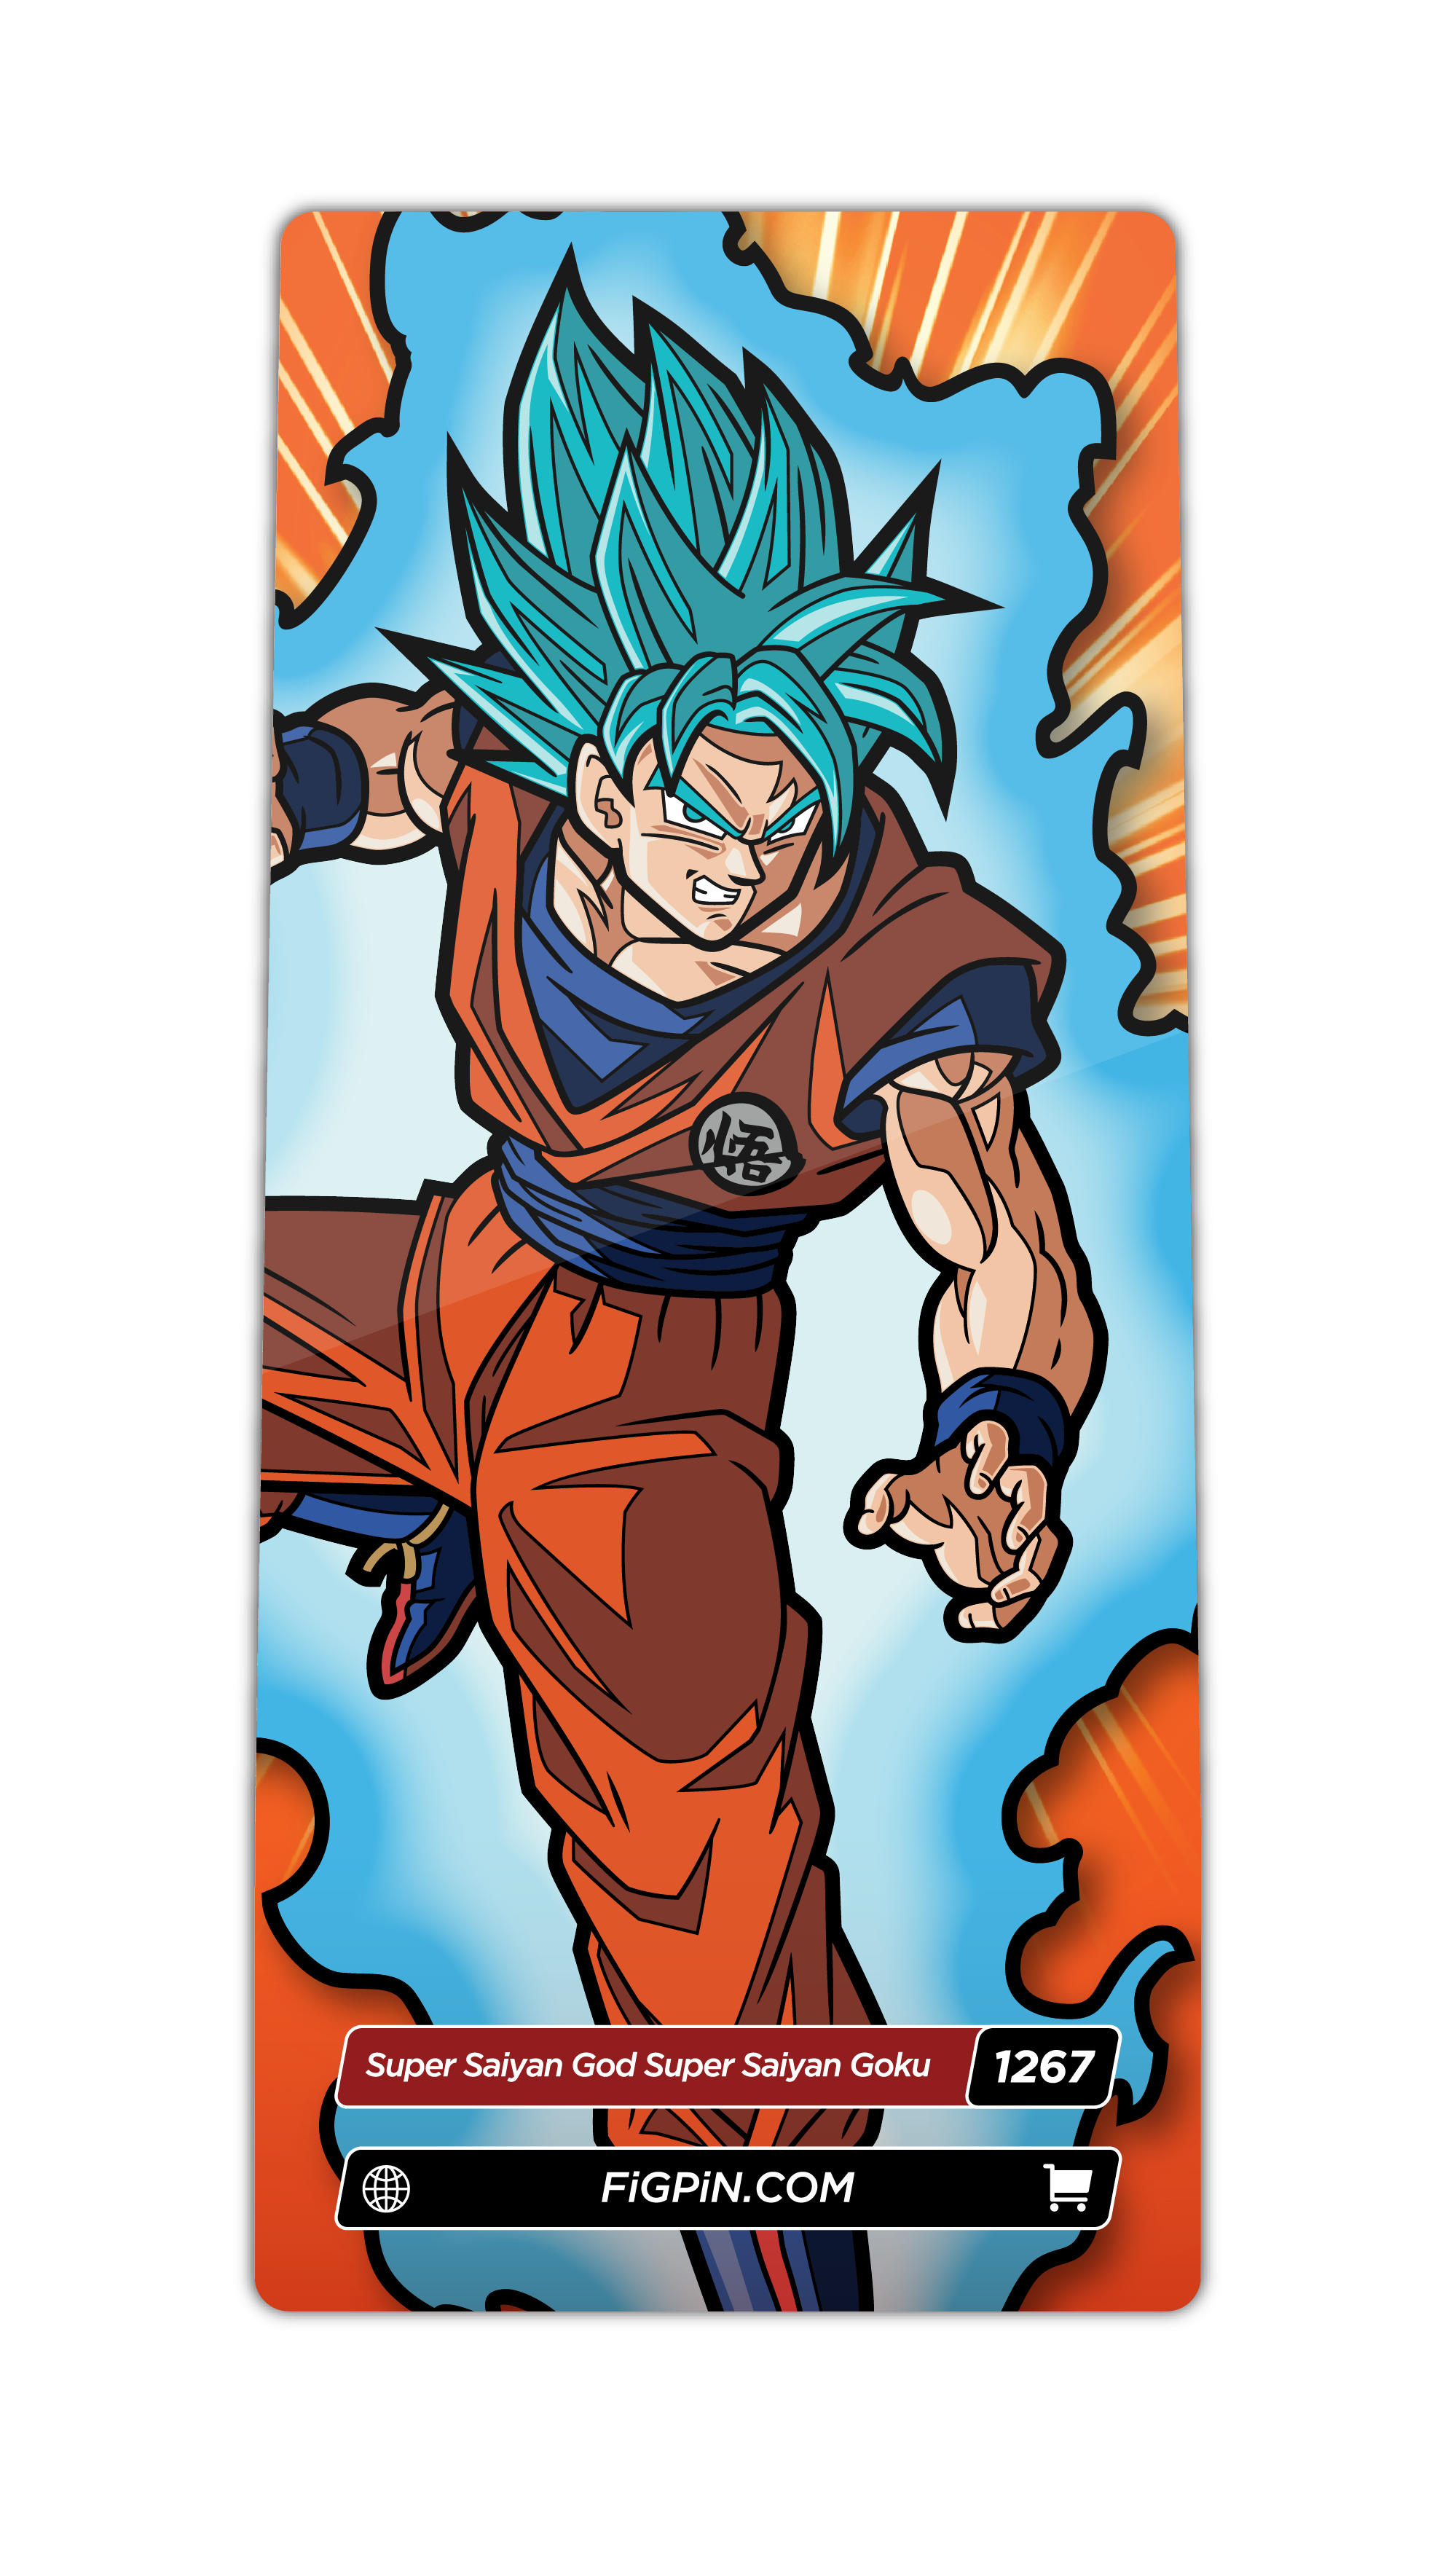 Character card of Dragon Ball Super's Super Saiyan God Super Saiyan Goku with text “Super Saiyan God Super Saiyan Goku (1267)” and link to FiGPiN’s website